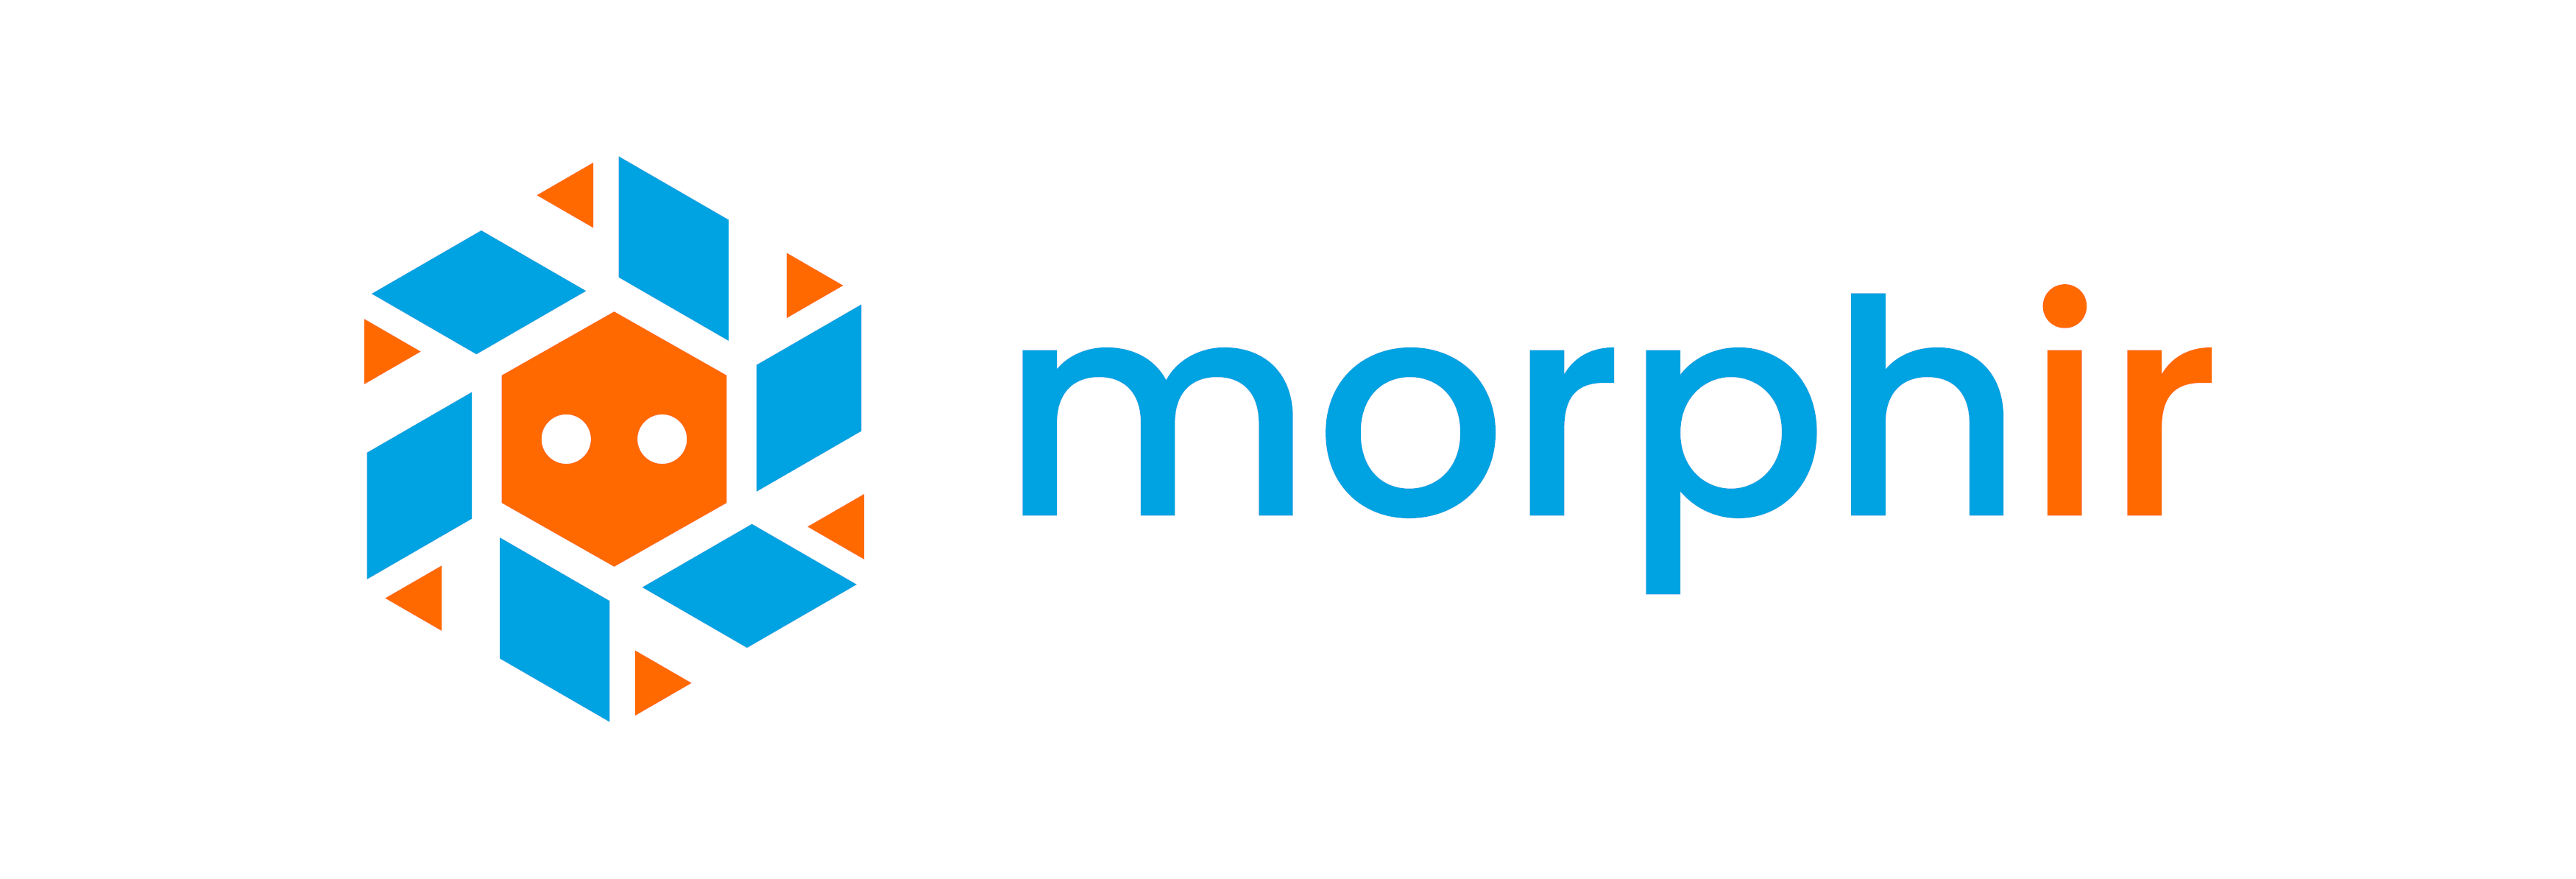 Morphir